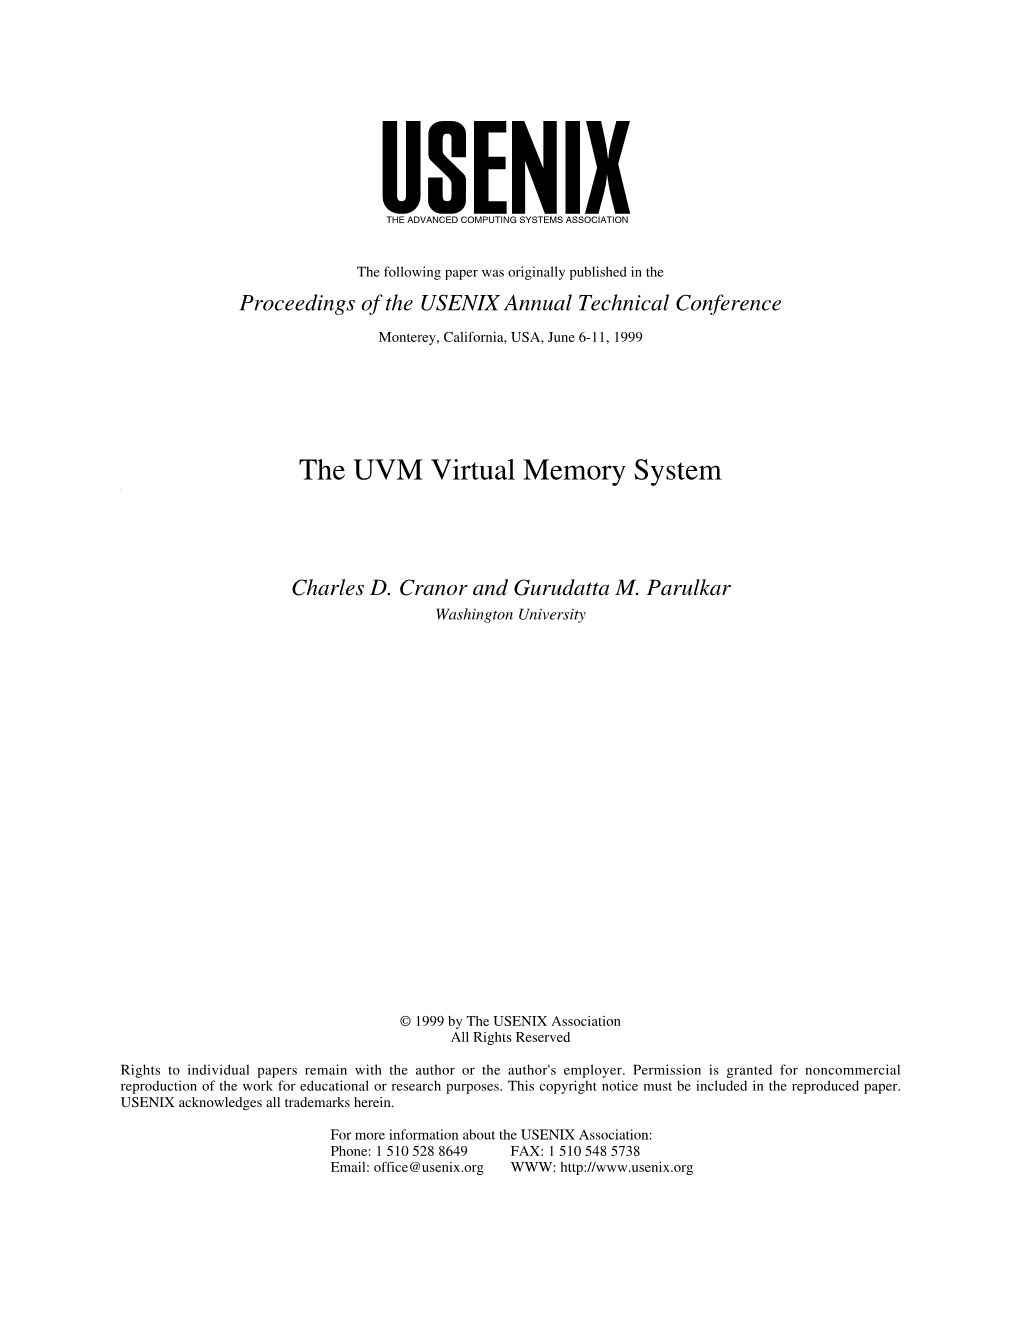 The UVM Virtual Memory System